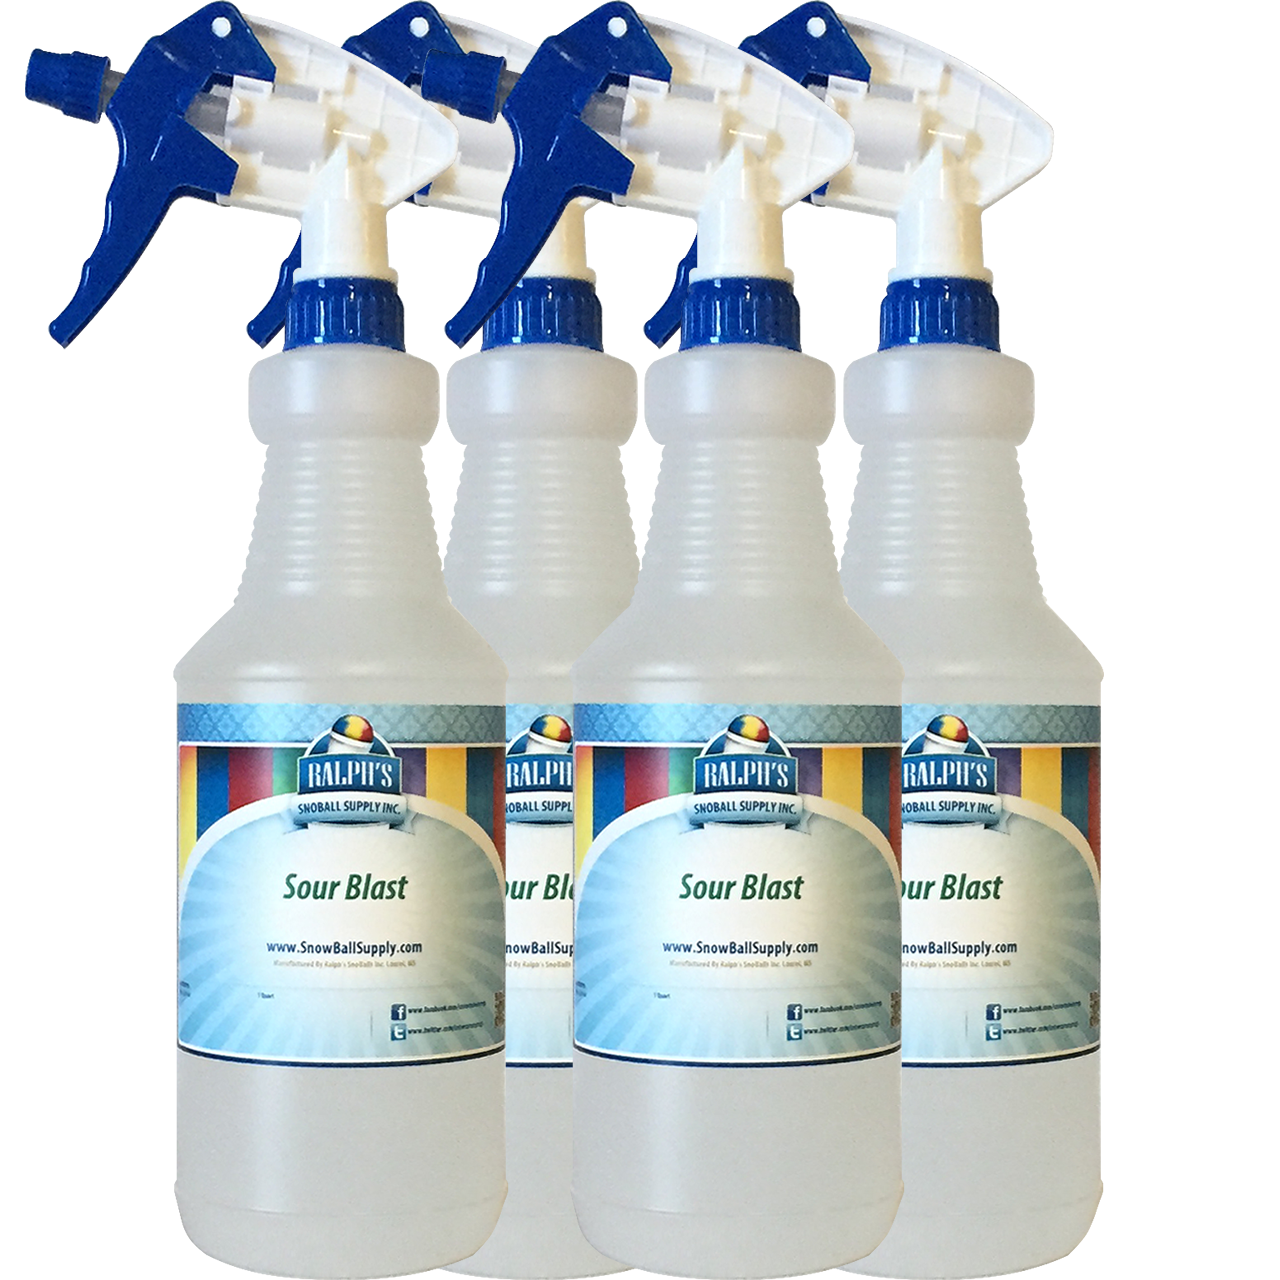 4 Quarts of Sour Blast Spray - Save $3.00